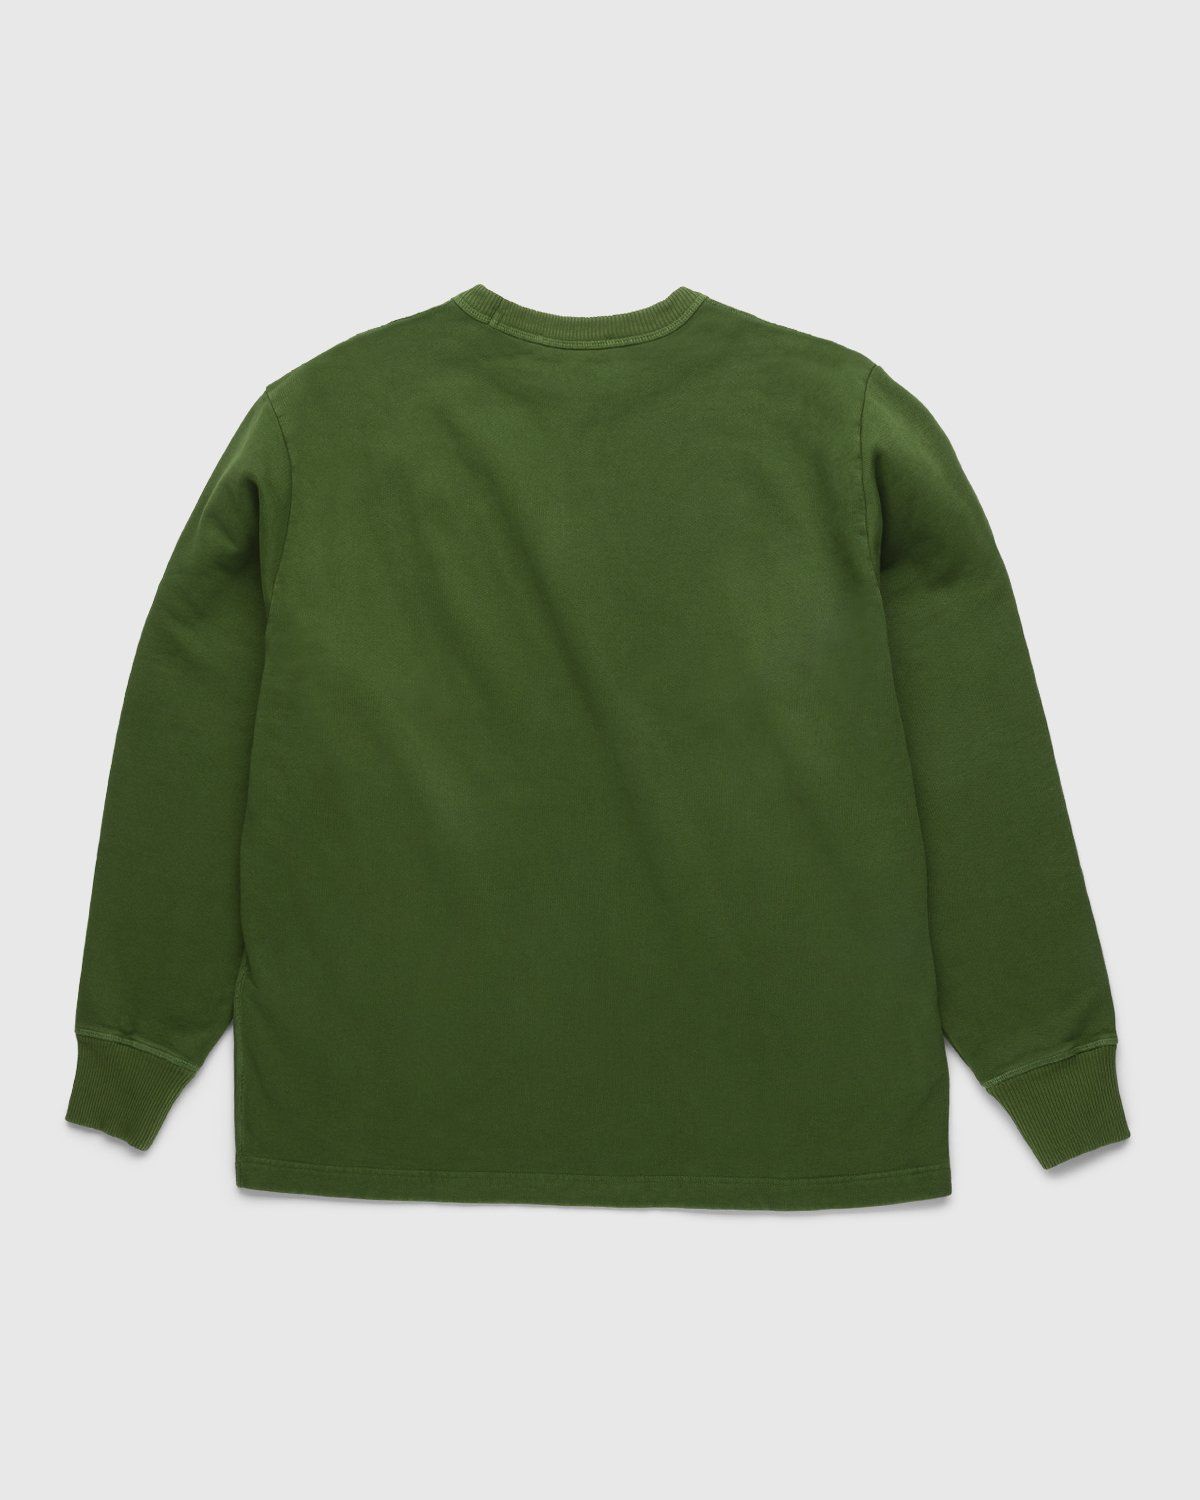 Acne Studios – Organic Cotton Crewneck Sweatshirt Bottle Green - Sweats - Green - Image 2